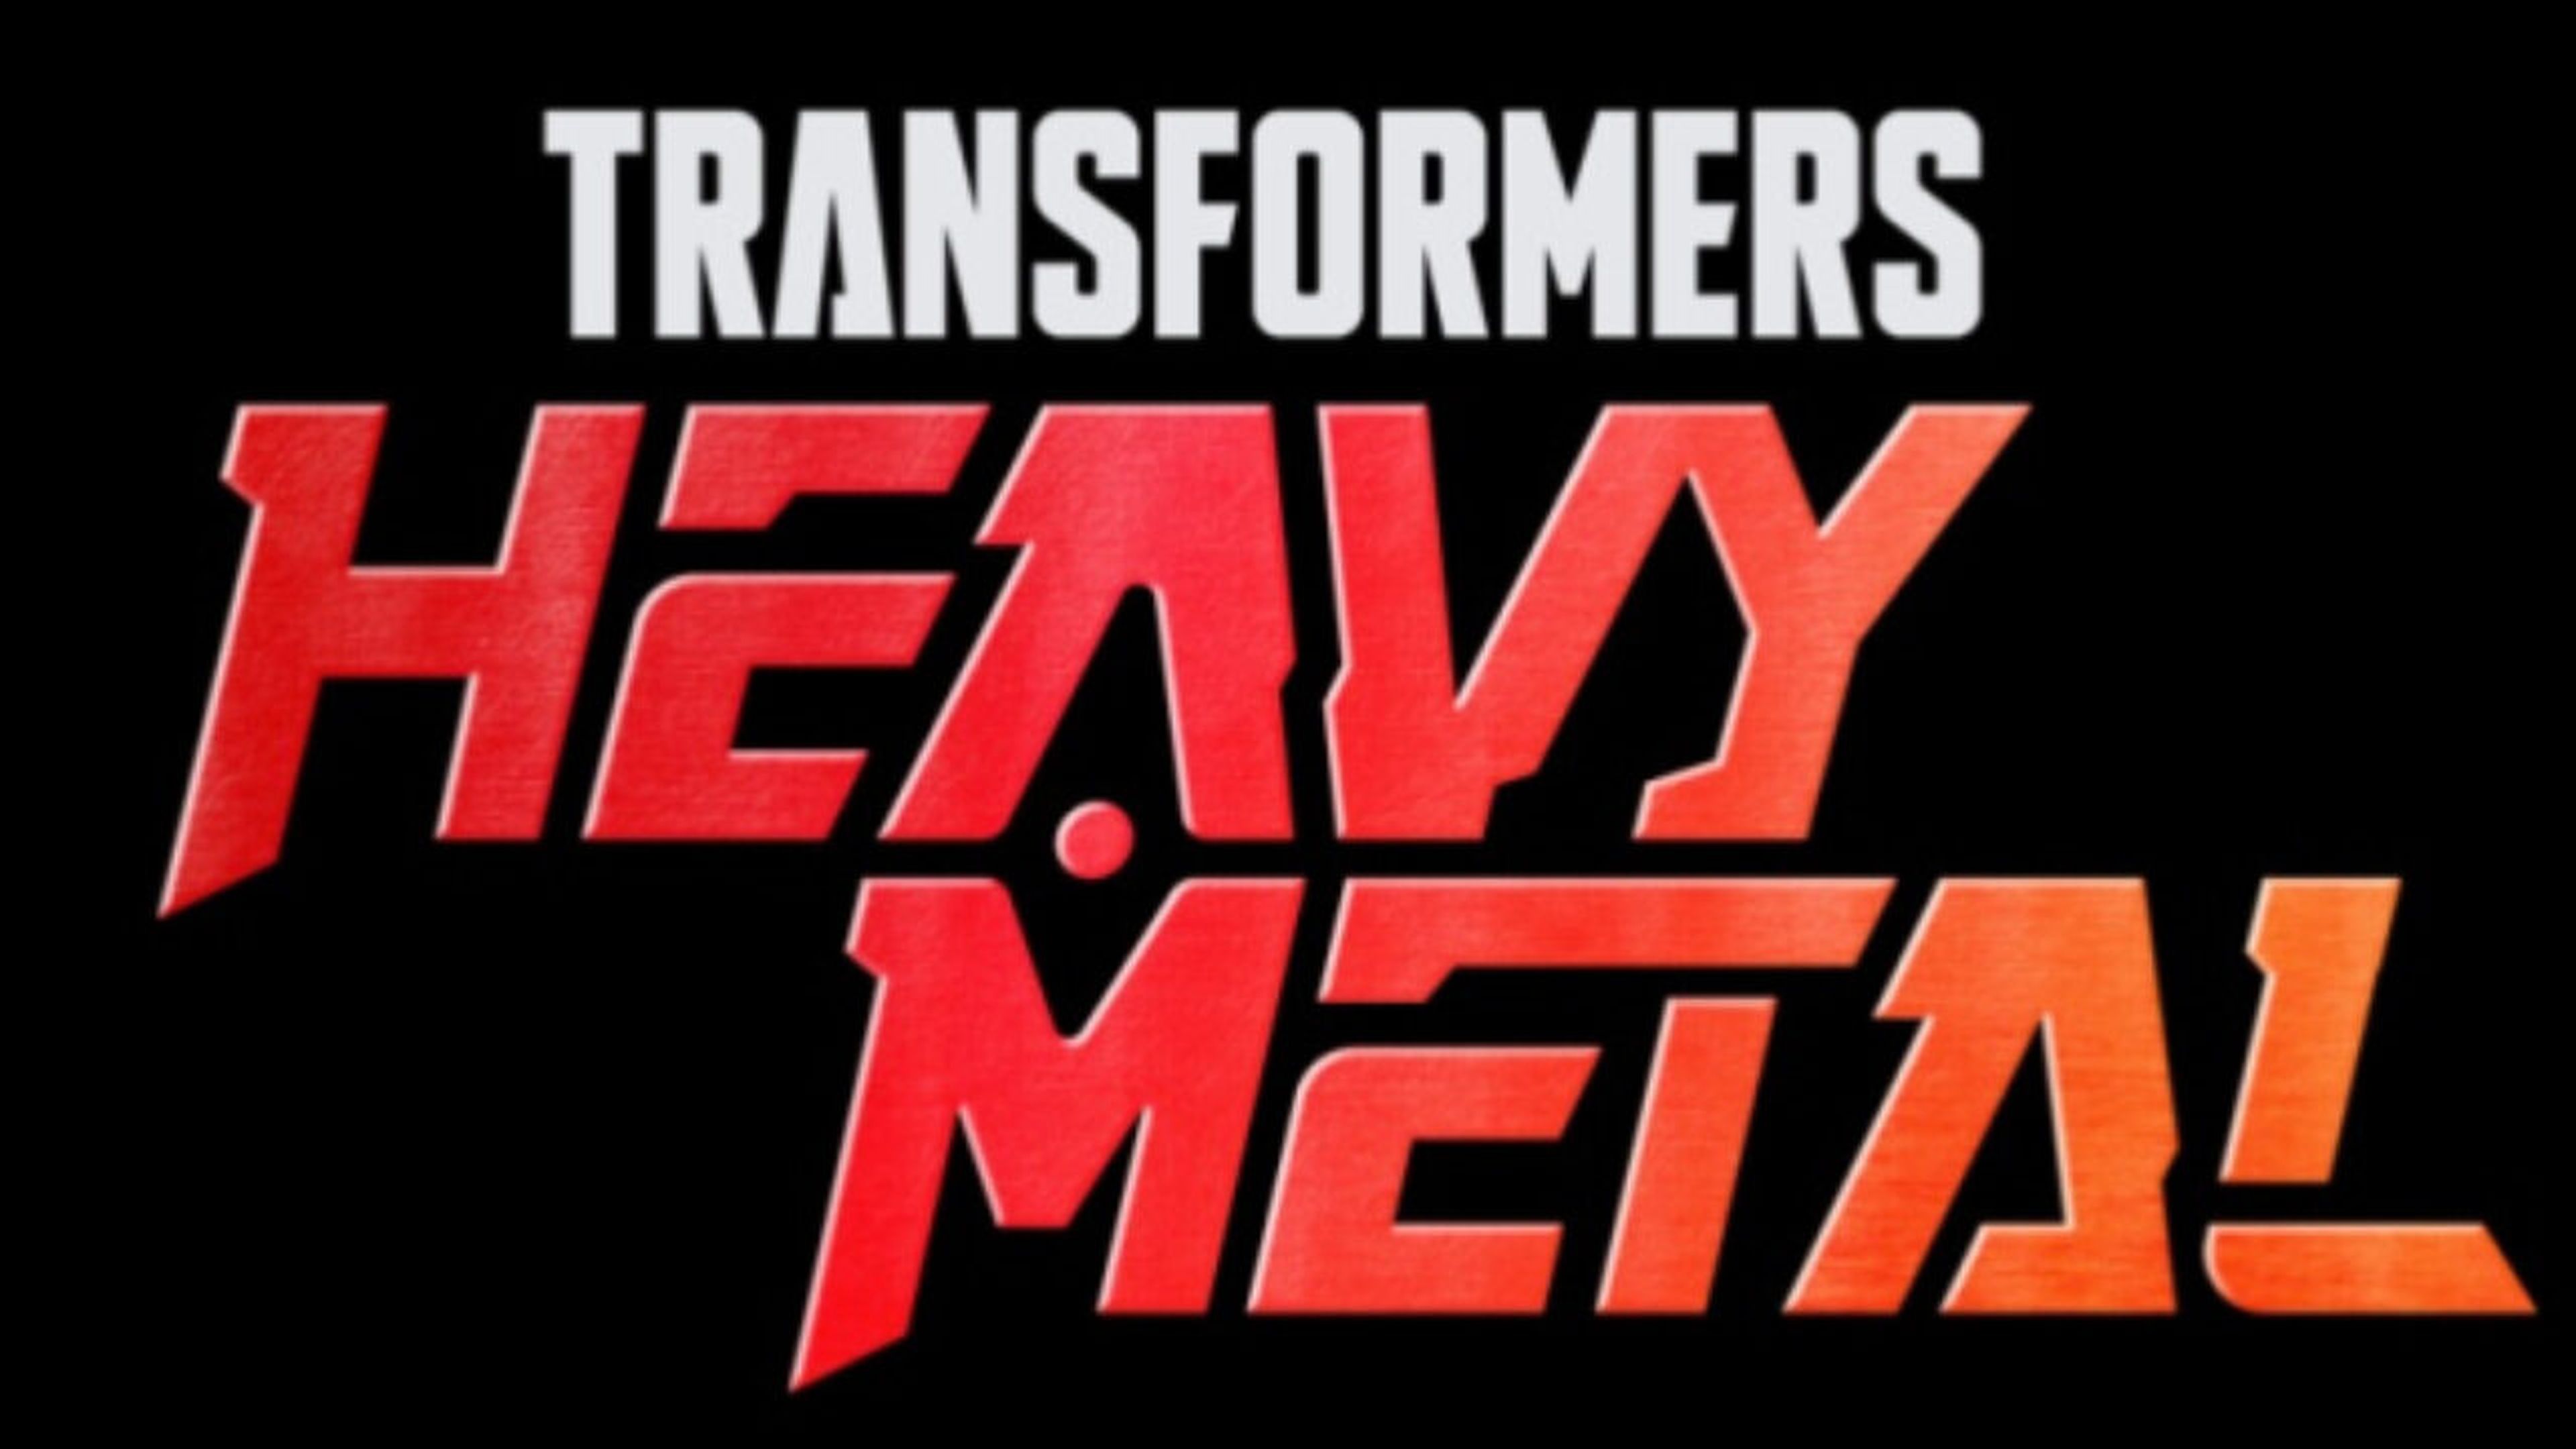 Transformers Heavy Metal